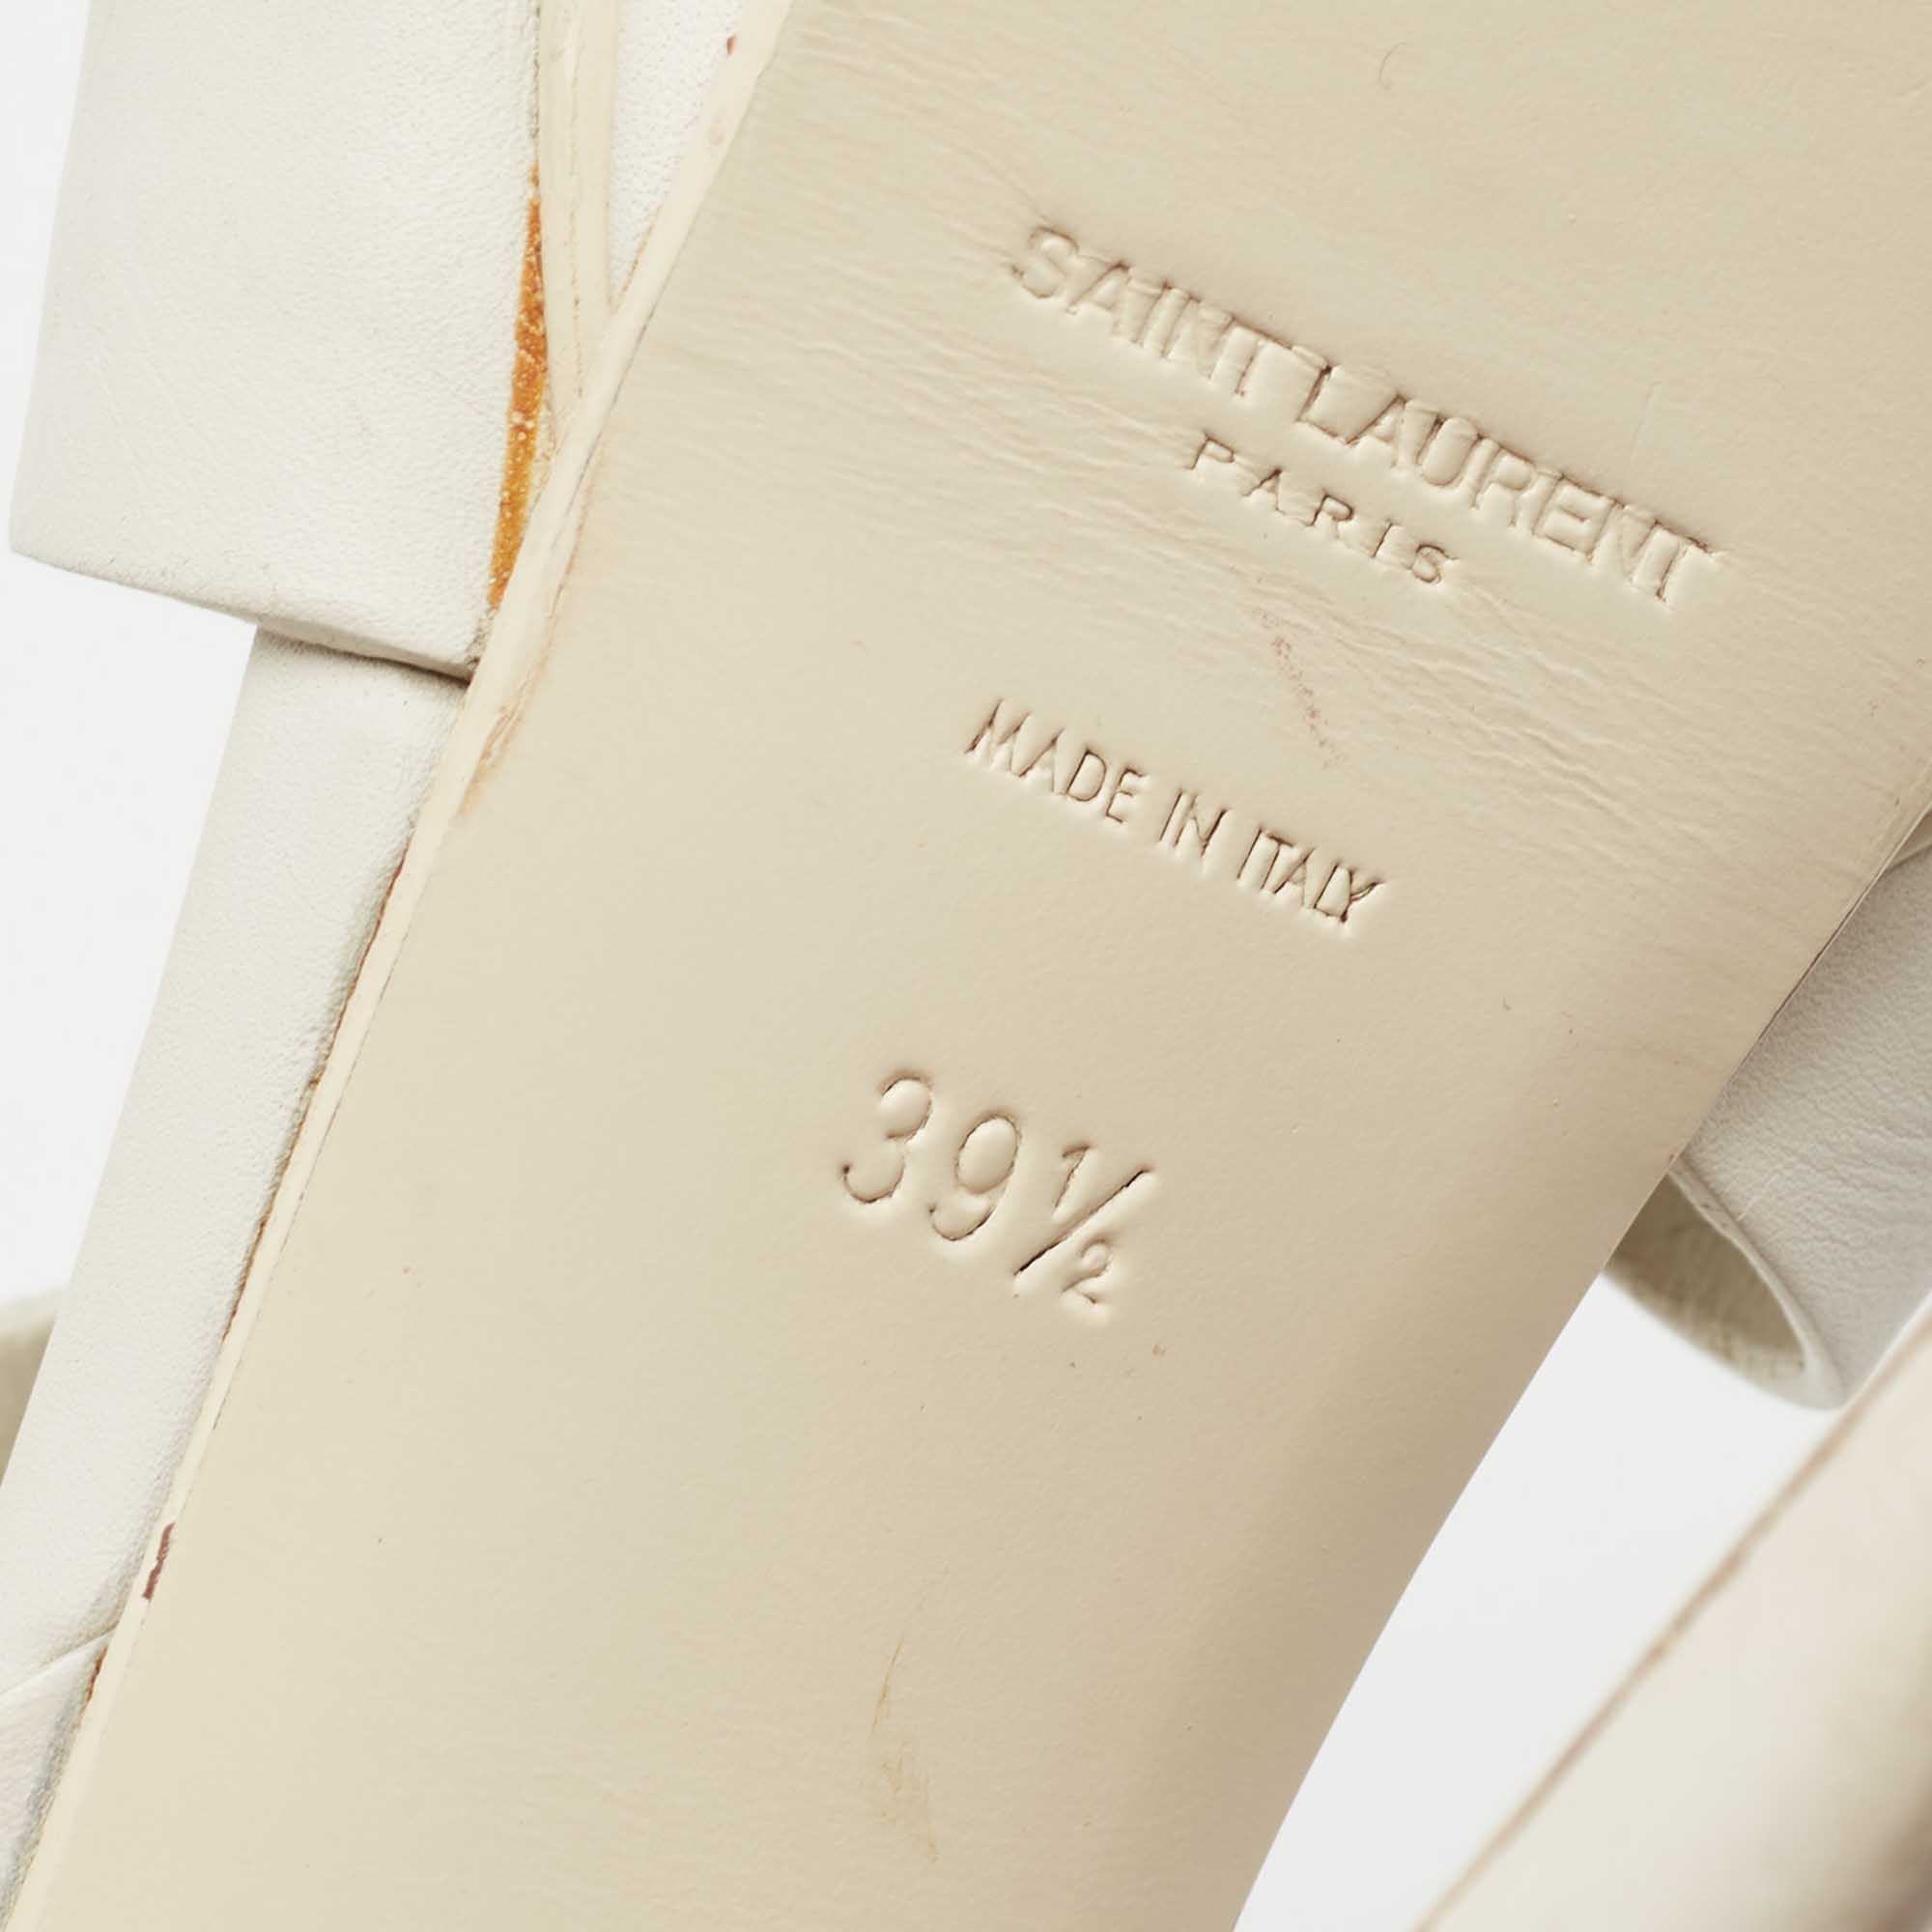 Yves Saint Laurent White Leather Tribute Platform Sandals Size 39.5